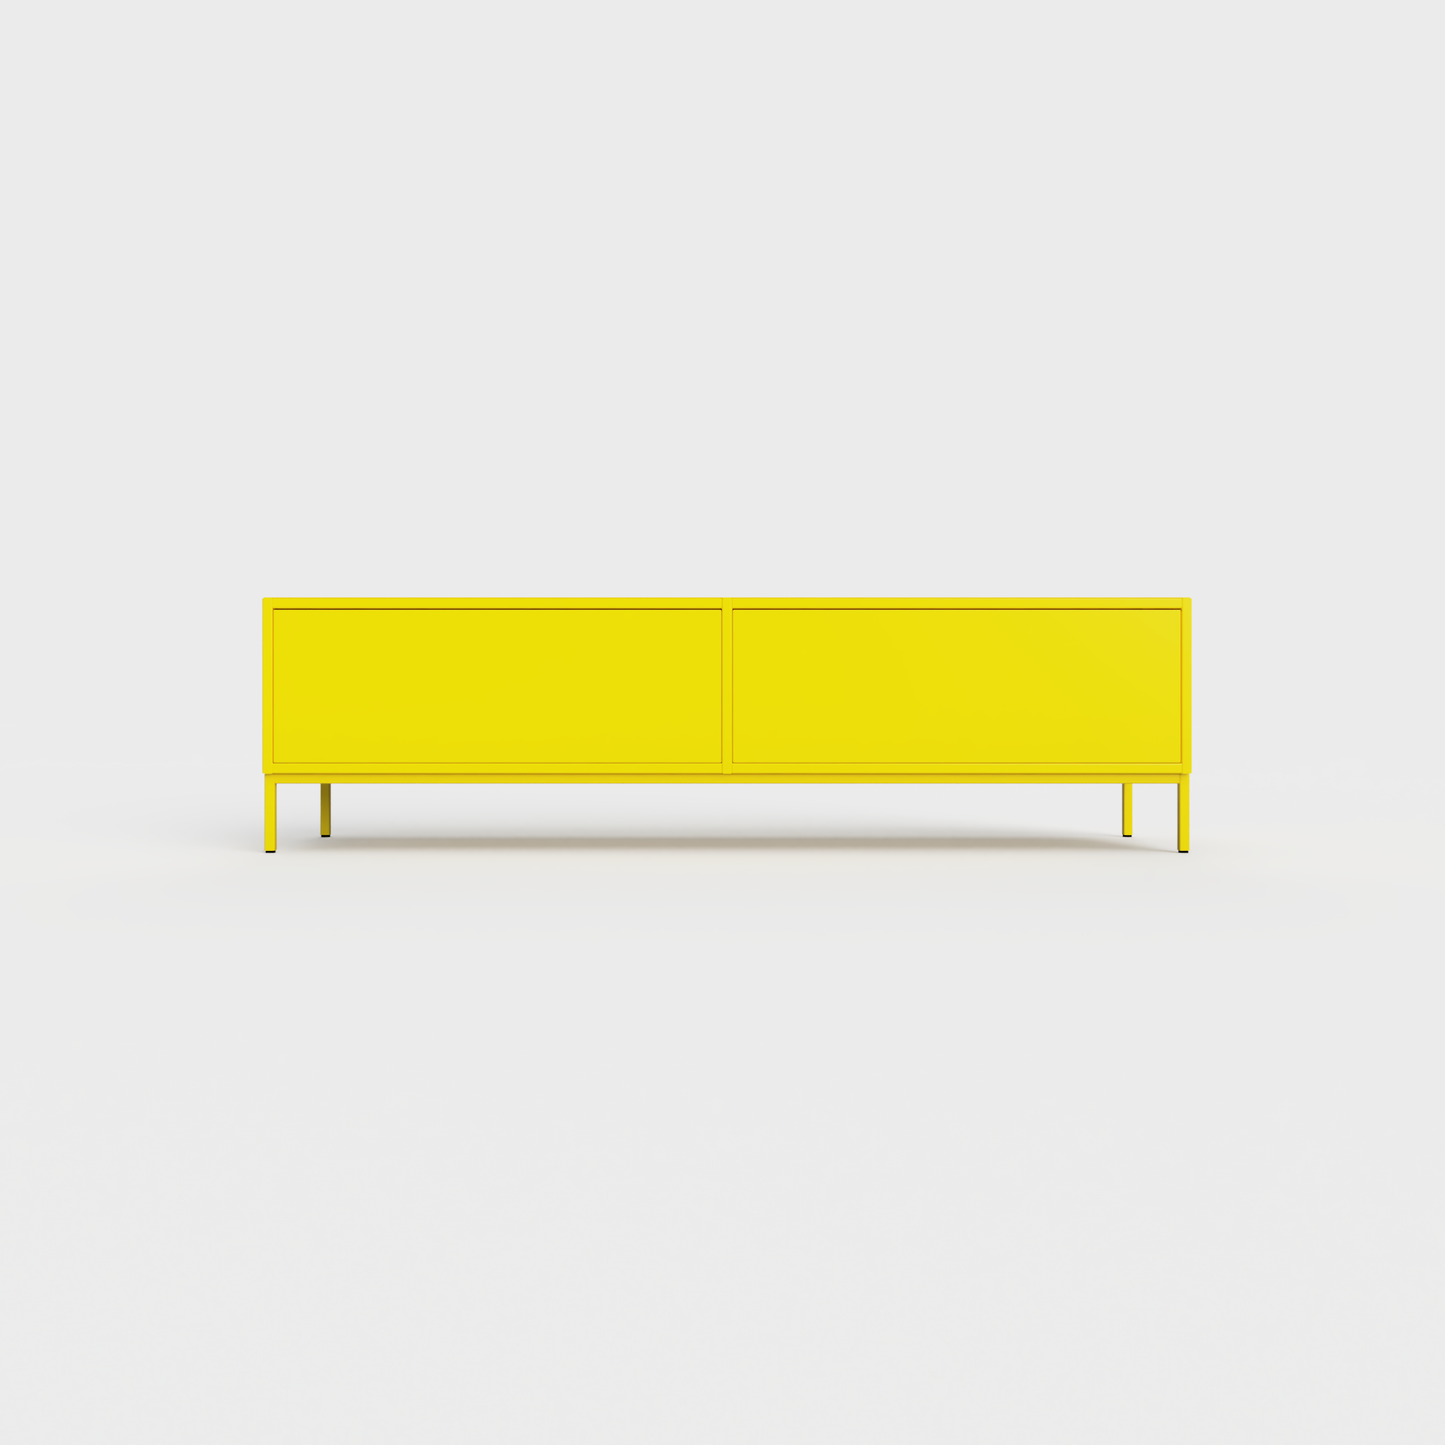 Prunus 01 Lowboard in Lemon color, powder-coated steel, elegant and modern piece of furniture for your living room